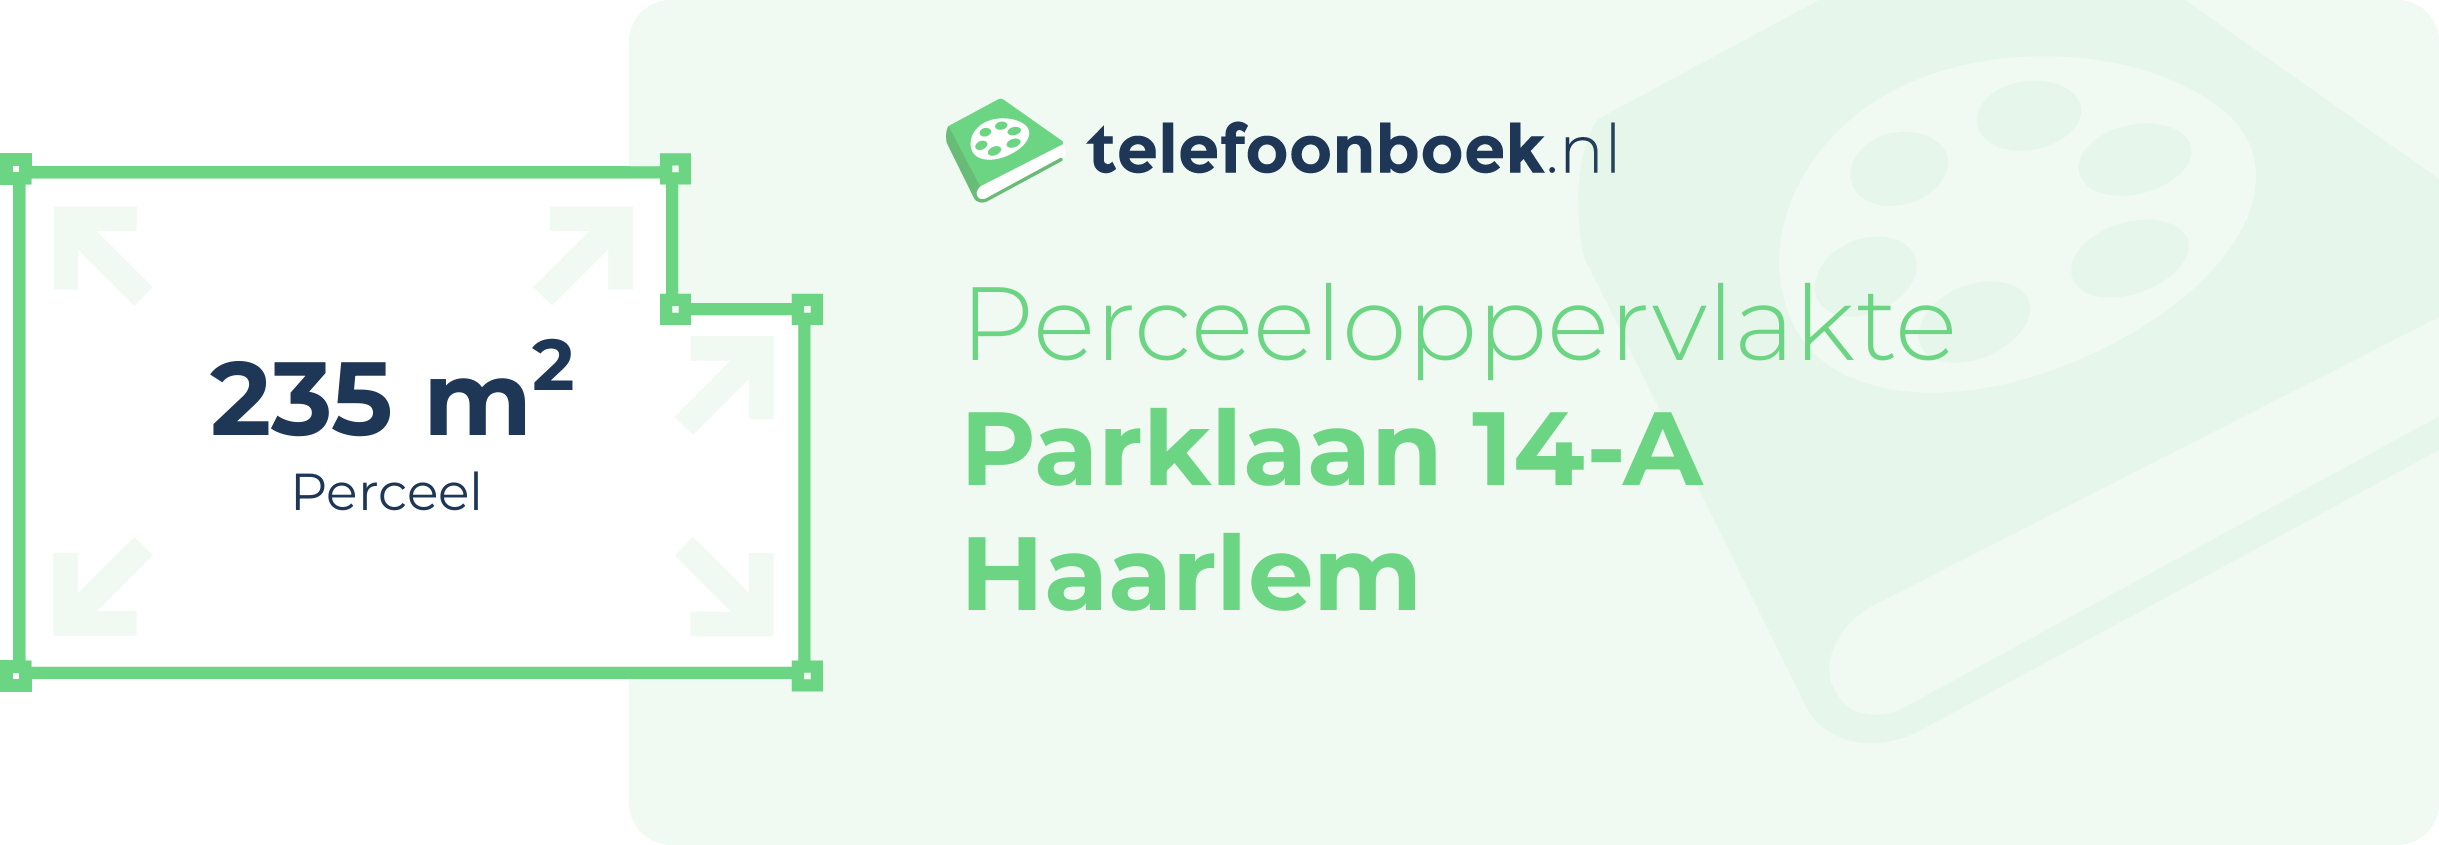 Perceeloppervlakte Parklaan 14-A Haarlem